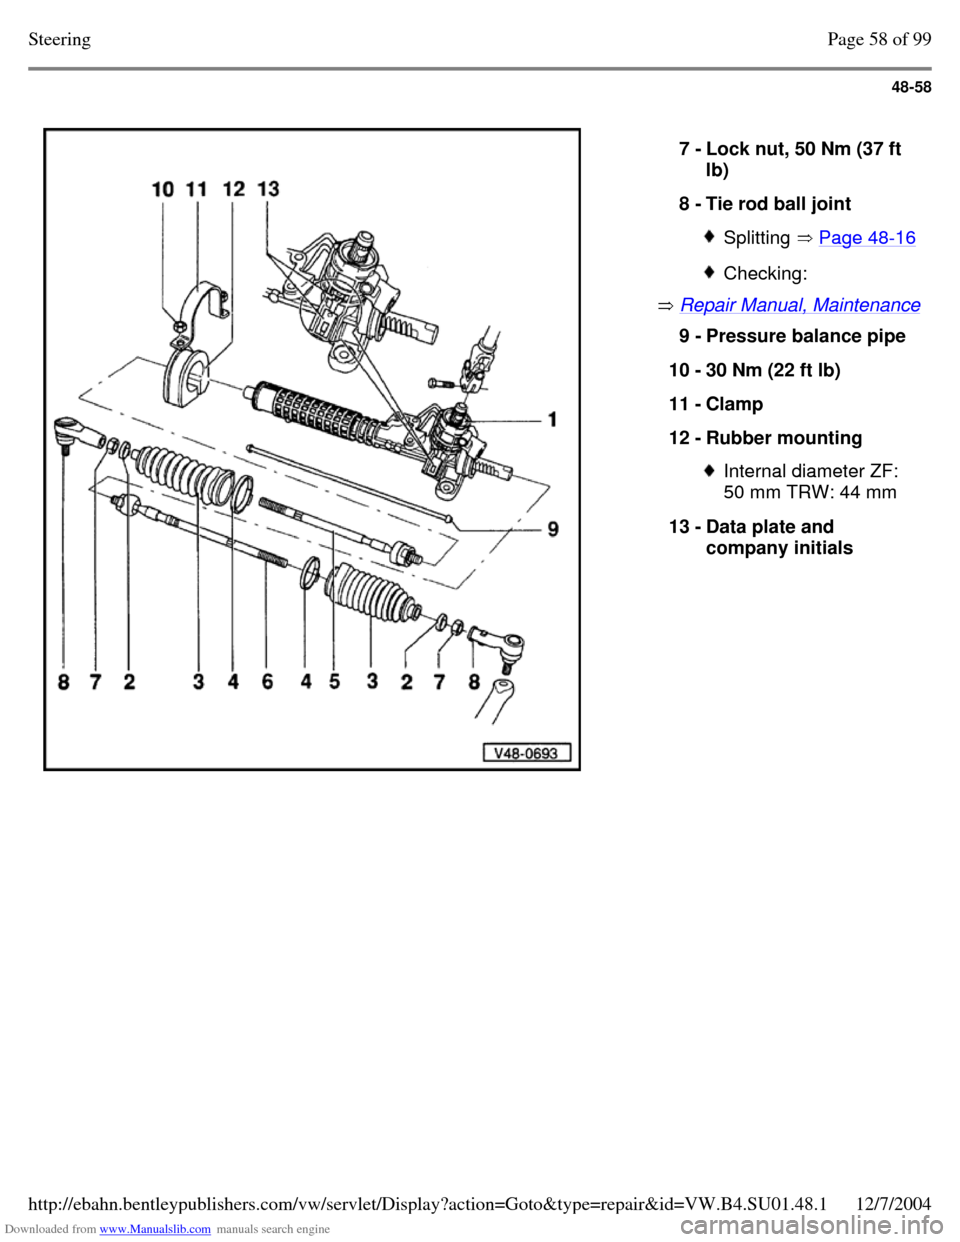 VOLKSWAGEN PASSAT 1995 B3, B4 / 3.G Service Workshop Manual Downloaded from www.Manualslib.com manuals search engine 48-58
   
 Repair Manual, Maintenance  7 - Lock nut, 50 Nm (37 ft 
lb) 
8 - Tie rod ball joint  Splitting  Page 48-16  Checking: 9 - Pressure b